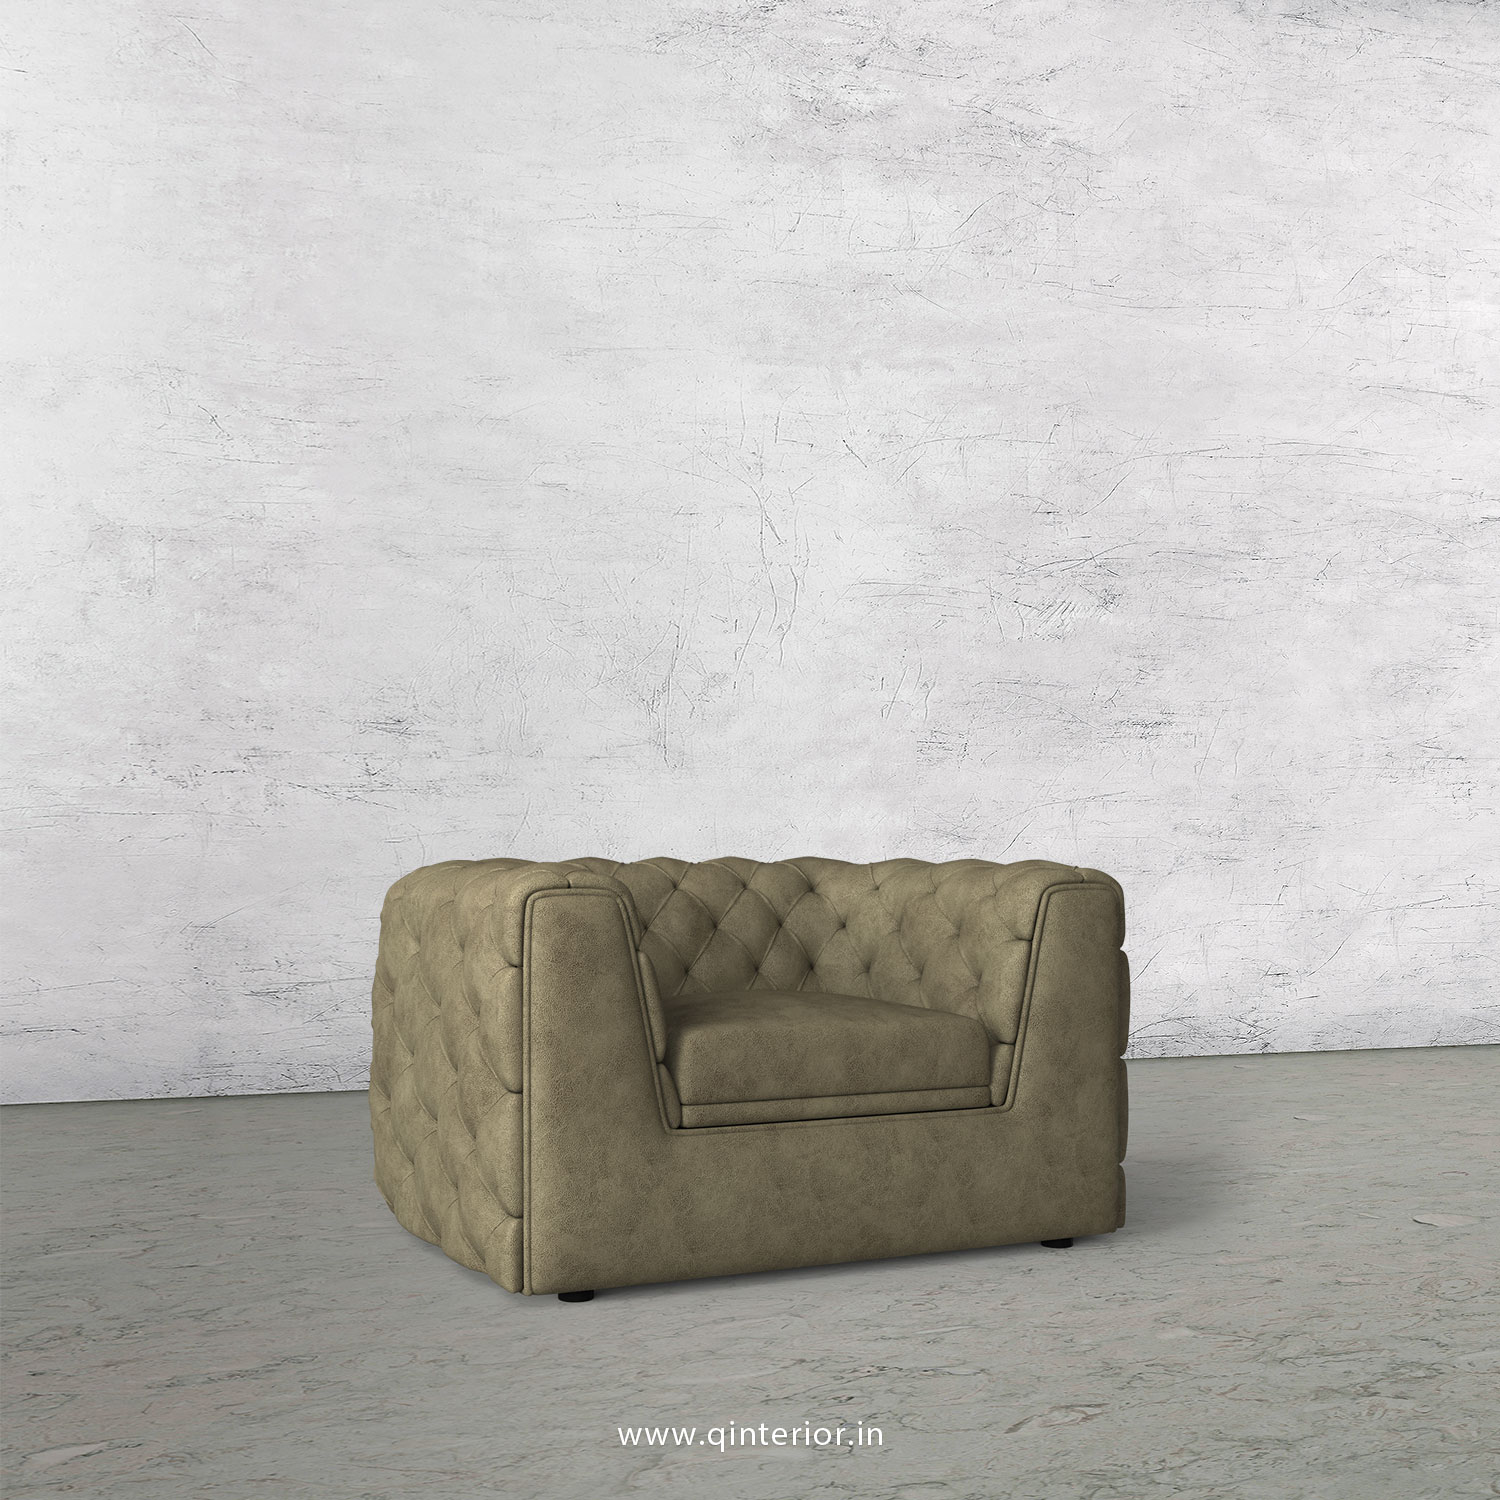 ERGO 1 Seater Sofa in Fab Leather Fabric - SFA009 FL03